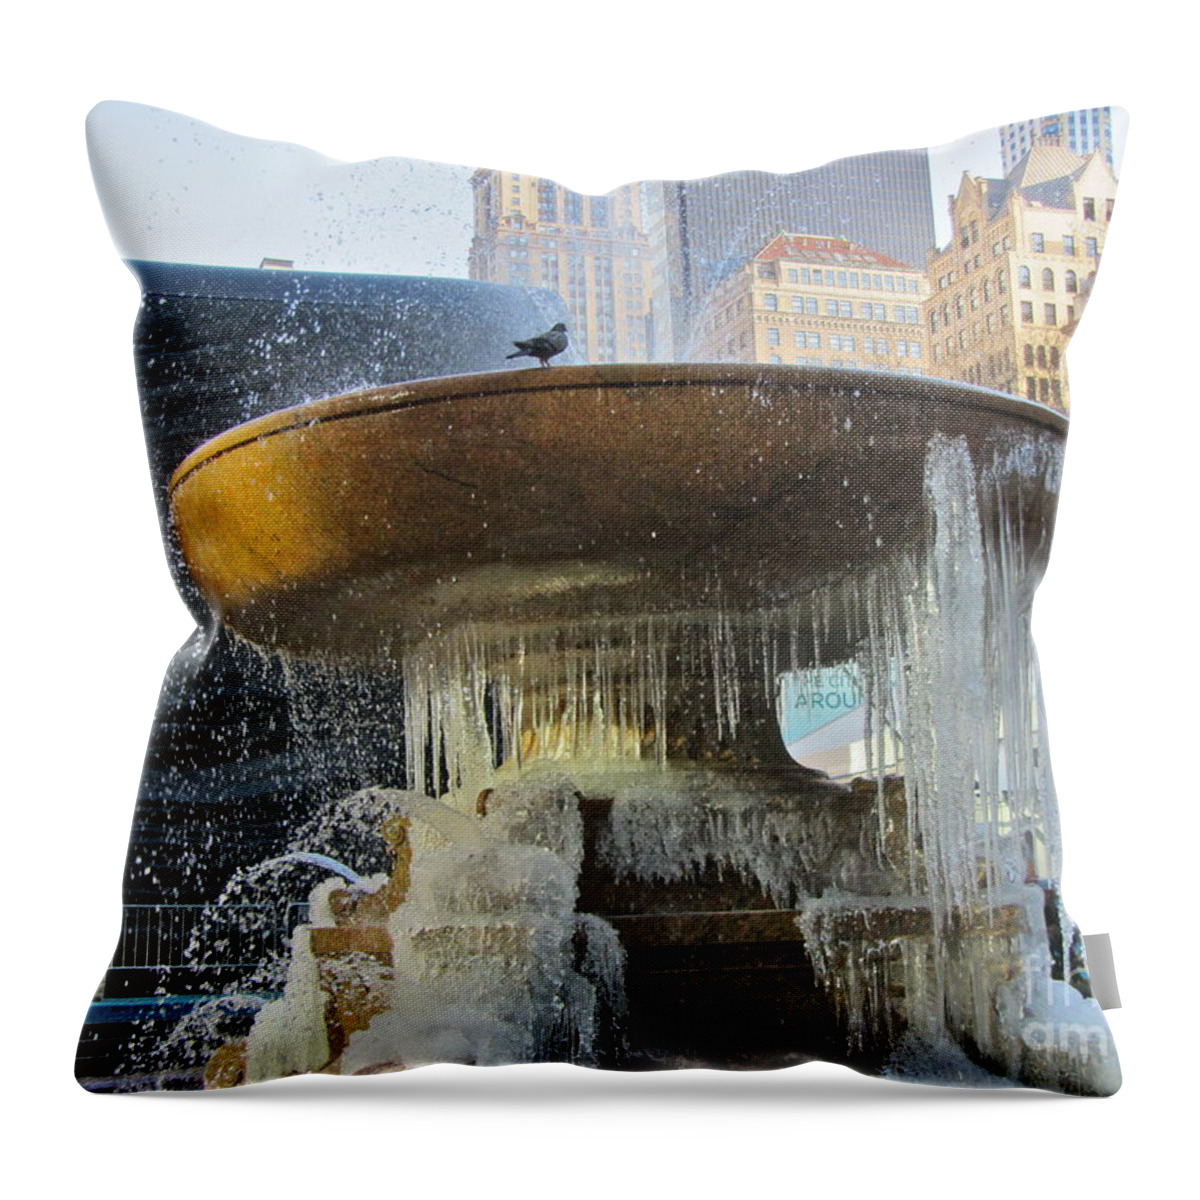 Color Throw Pillow featuring the photograph Frozen Fountain by Maritza Melendez